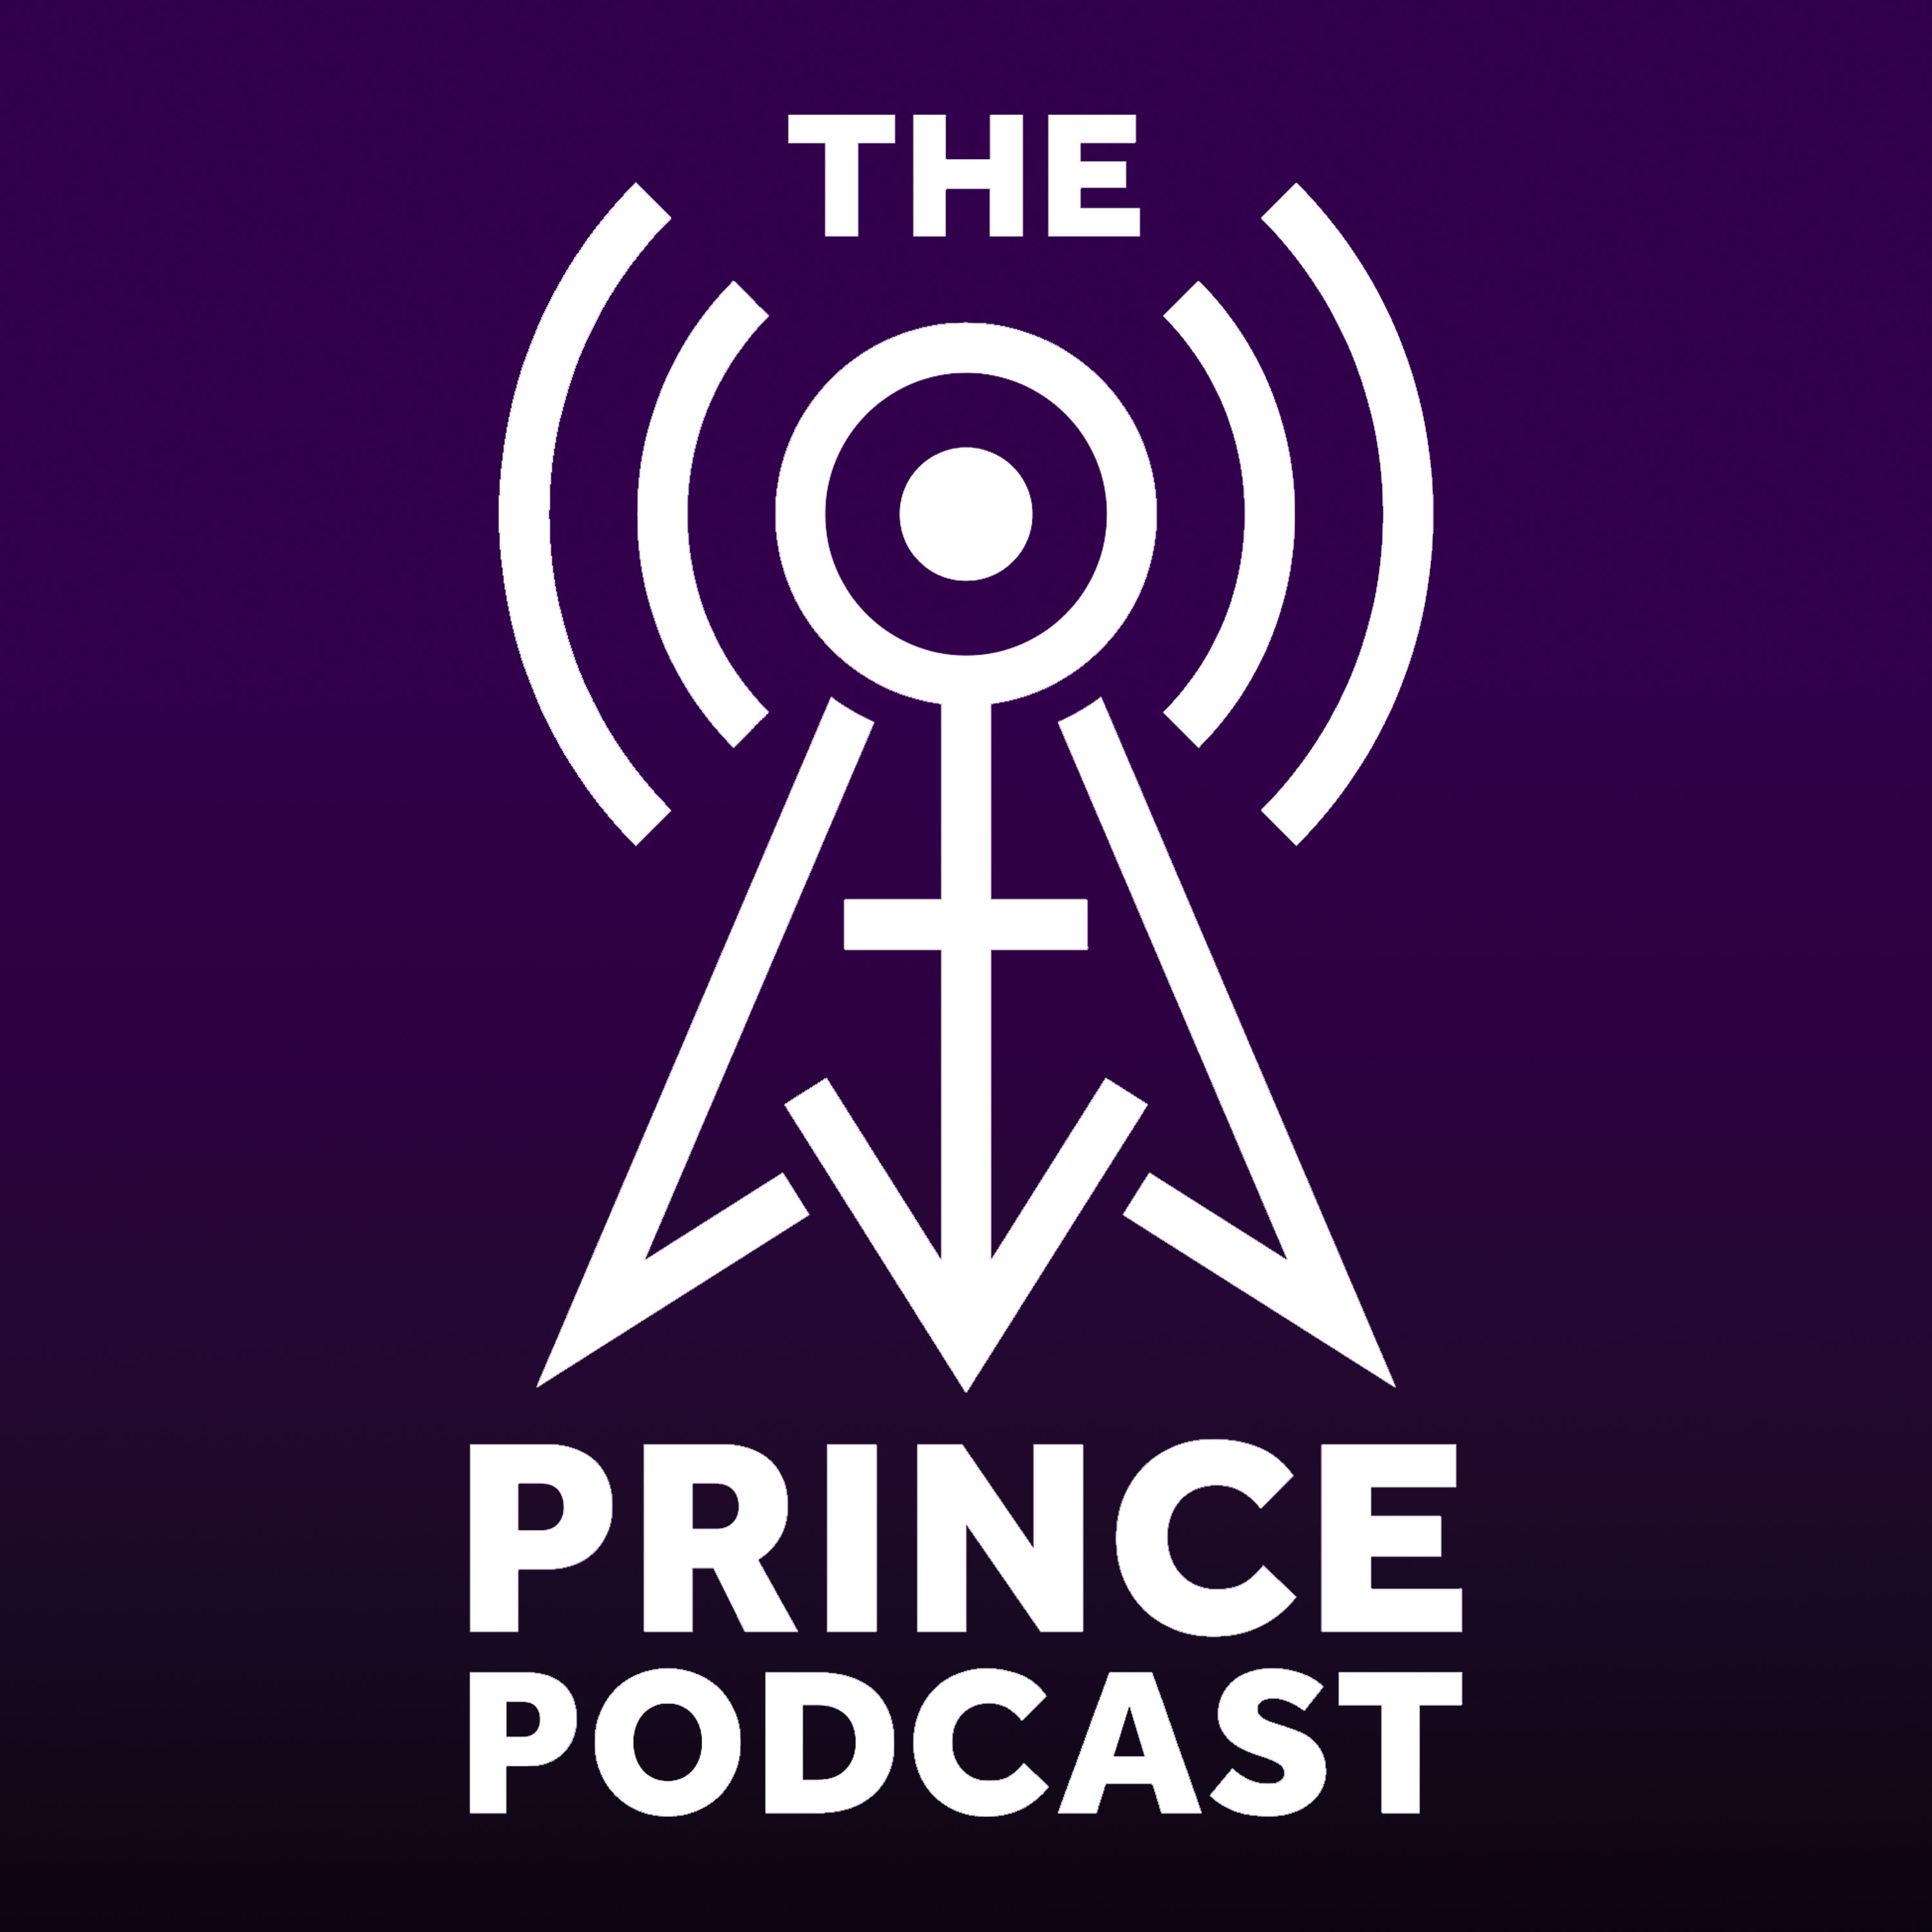 Podcast on Prince – Podcastjuice.net